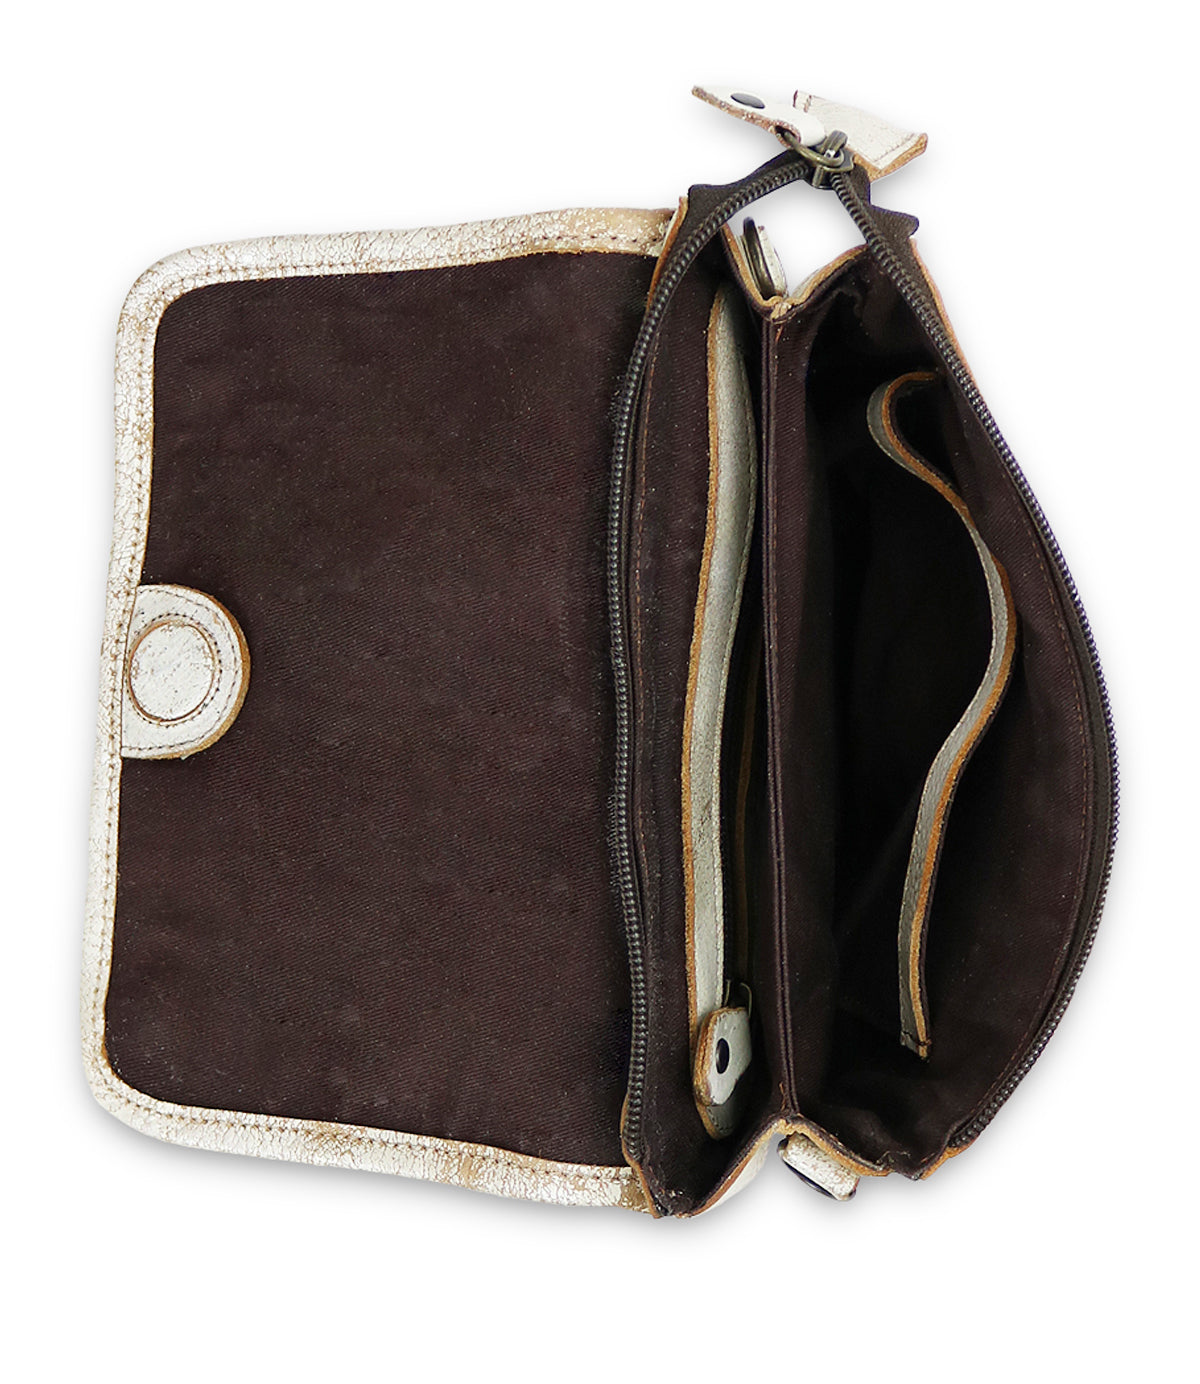 A stylish accessory, the Bed Stu Ziggy II purse features a zipper.